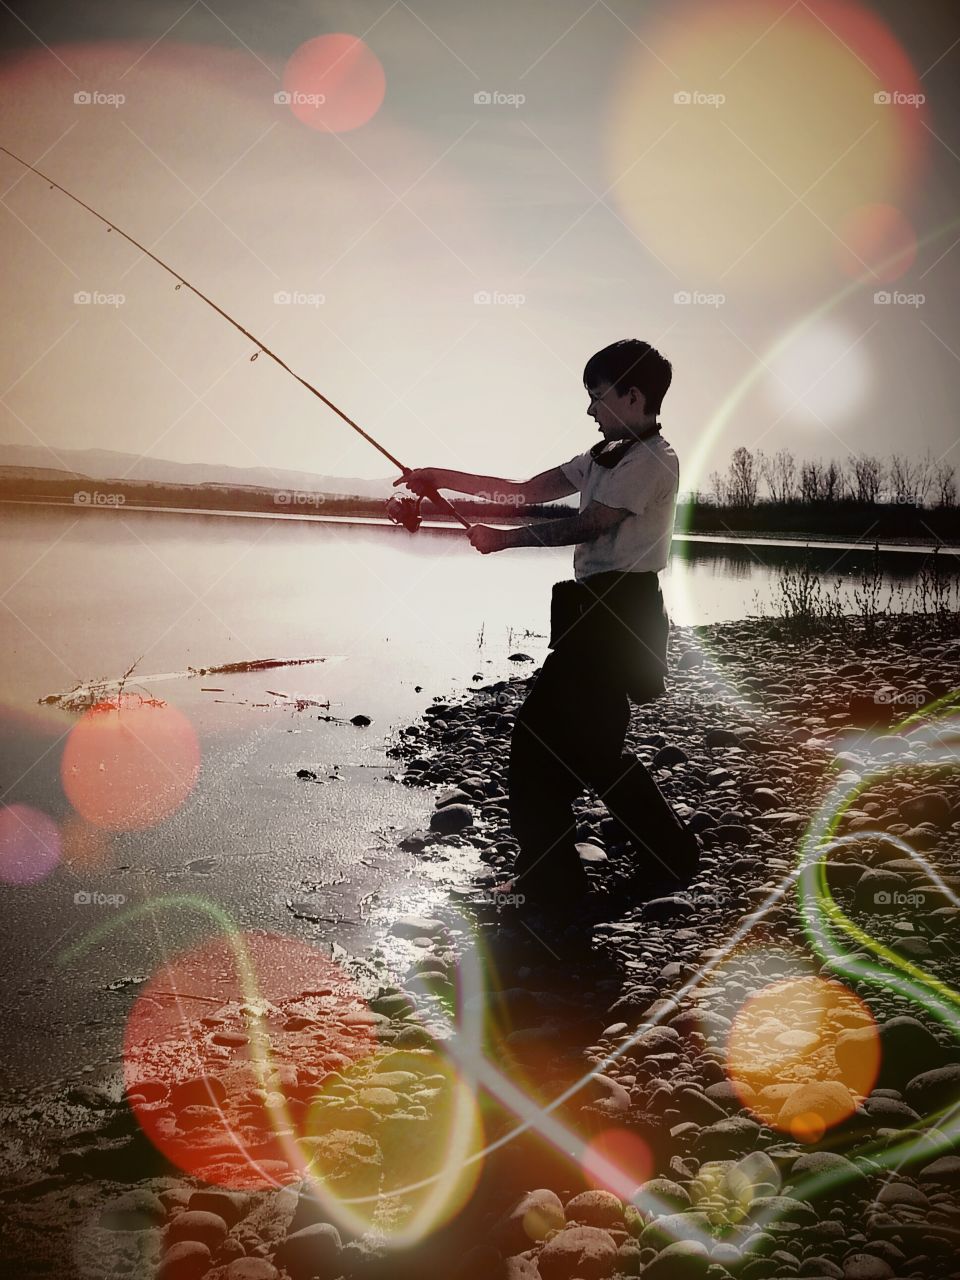 Fishing. My son, fishing in a lake, in Idaho.